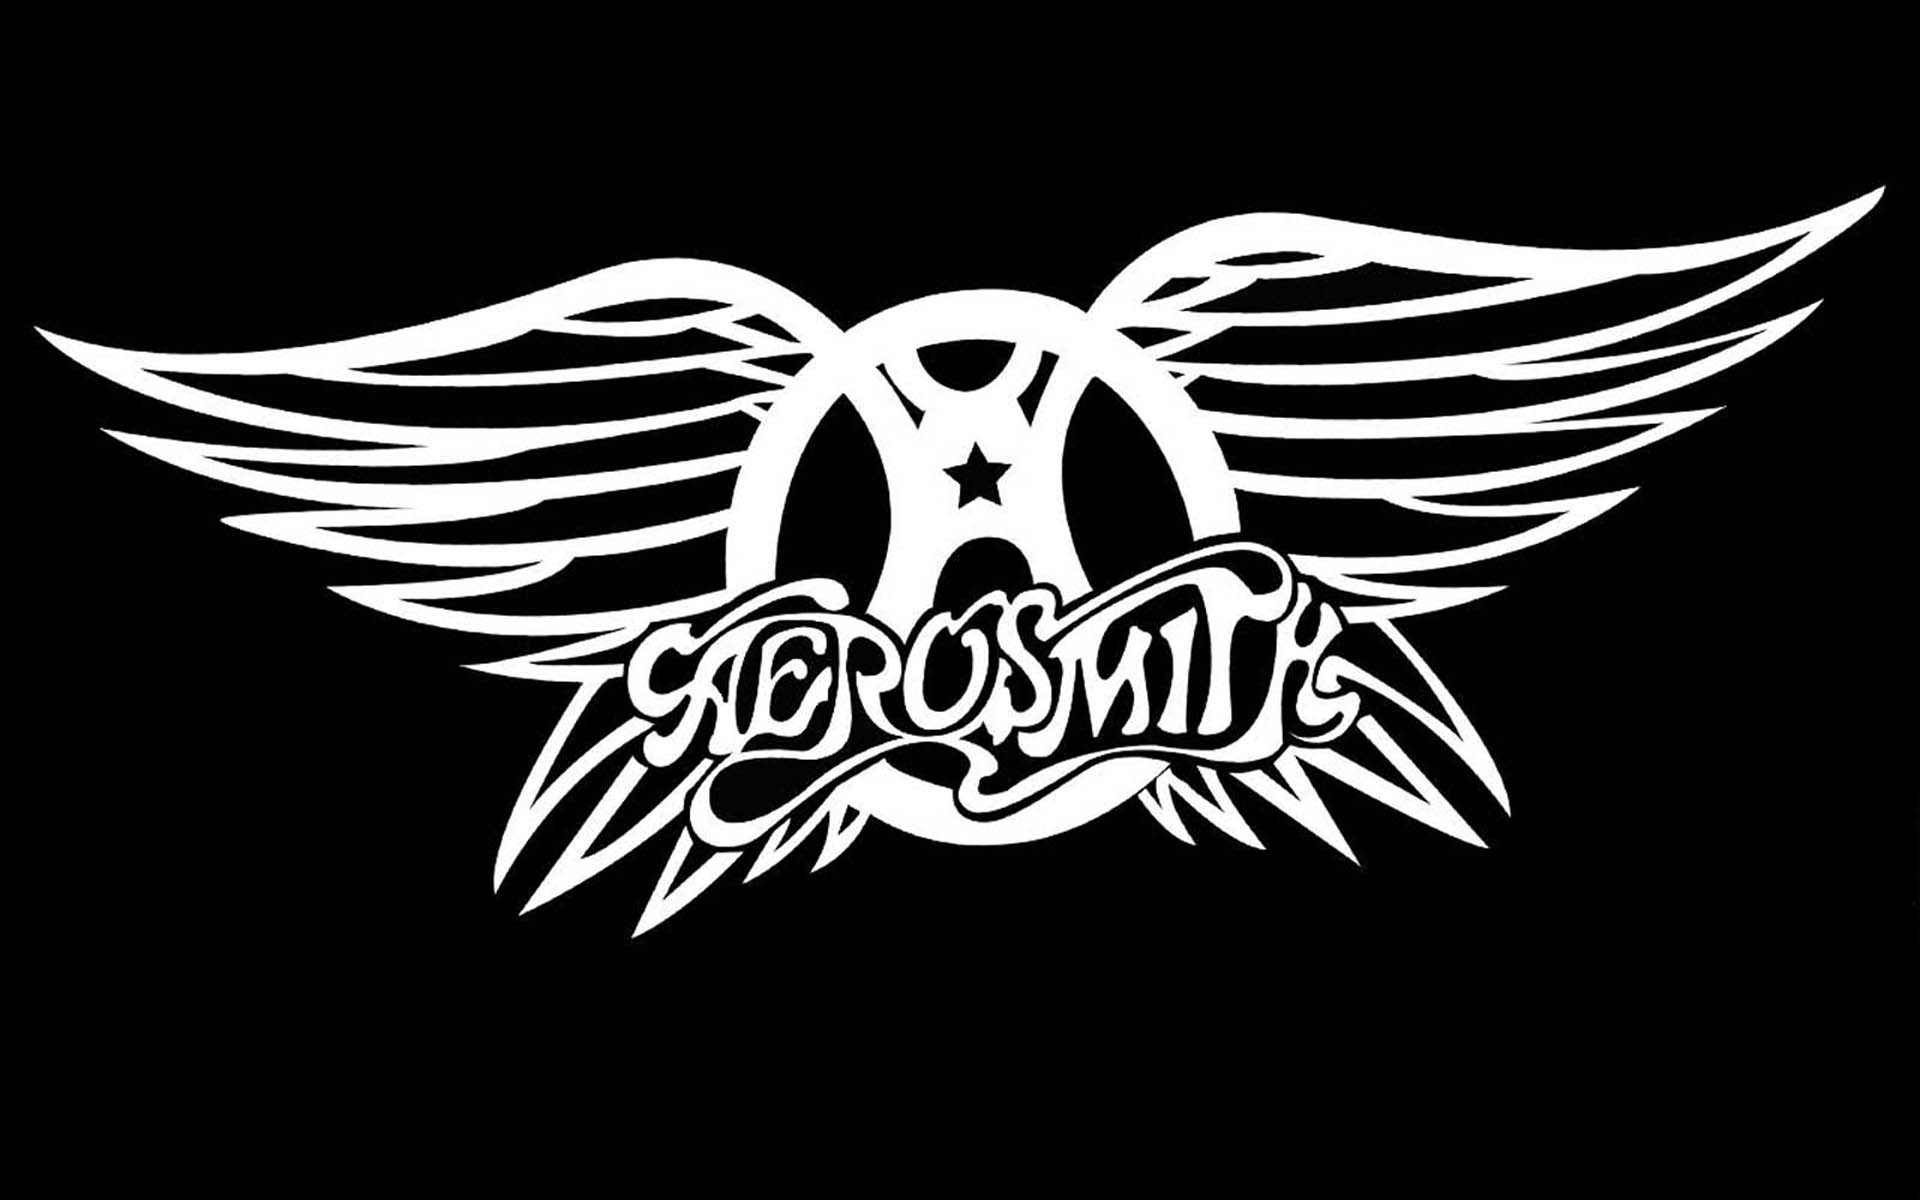 aerosmith discography download